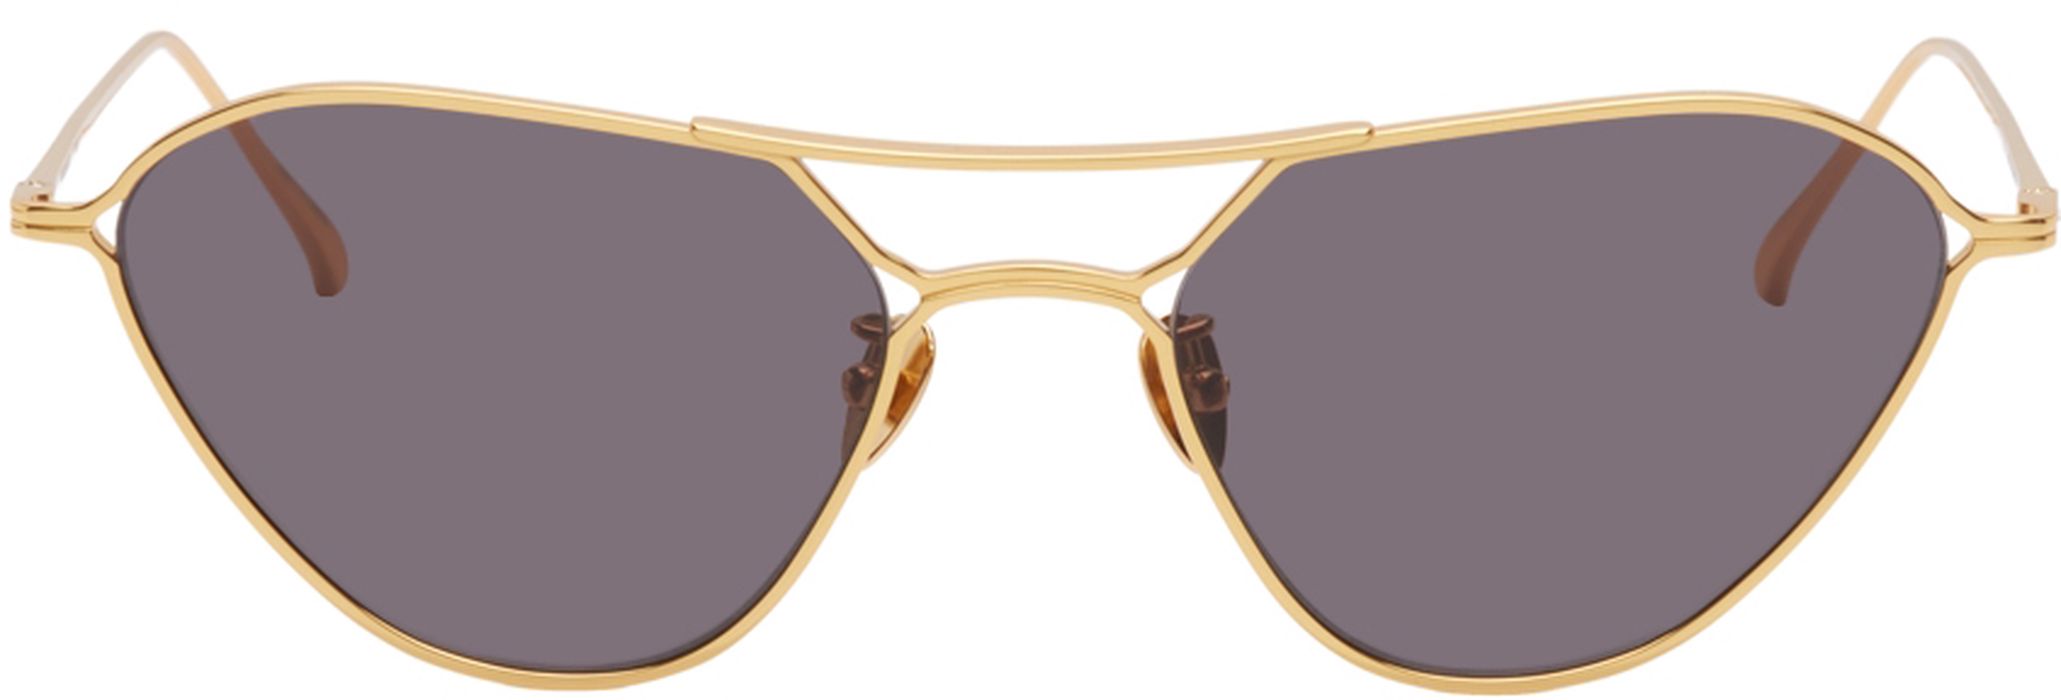 PROJEKT PRODUKT Gold GE-CC6 Sunglasses